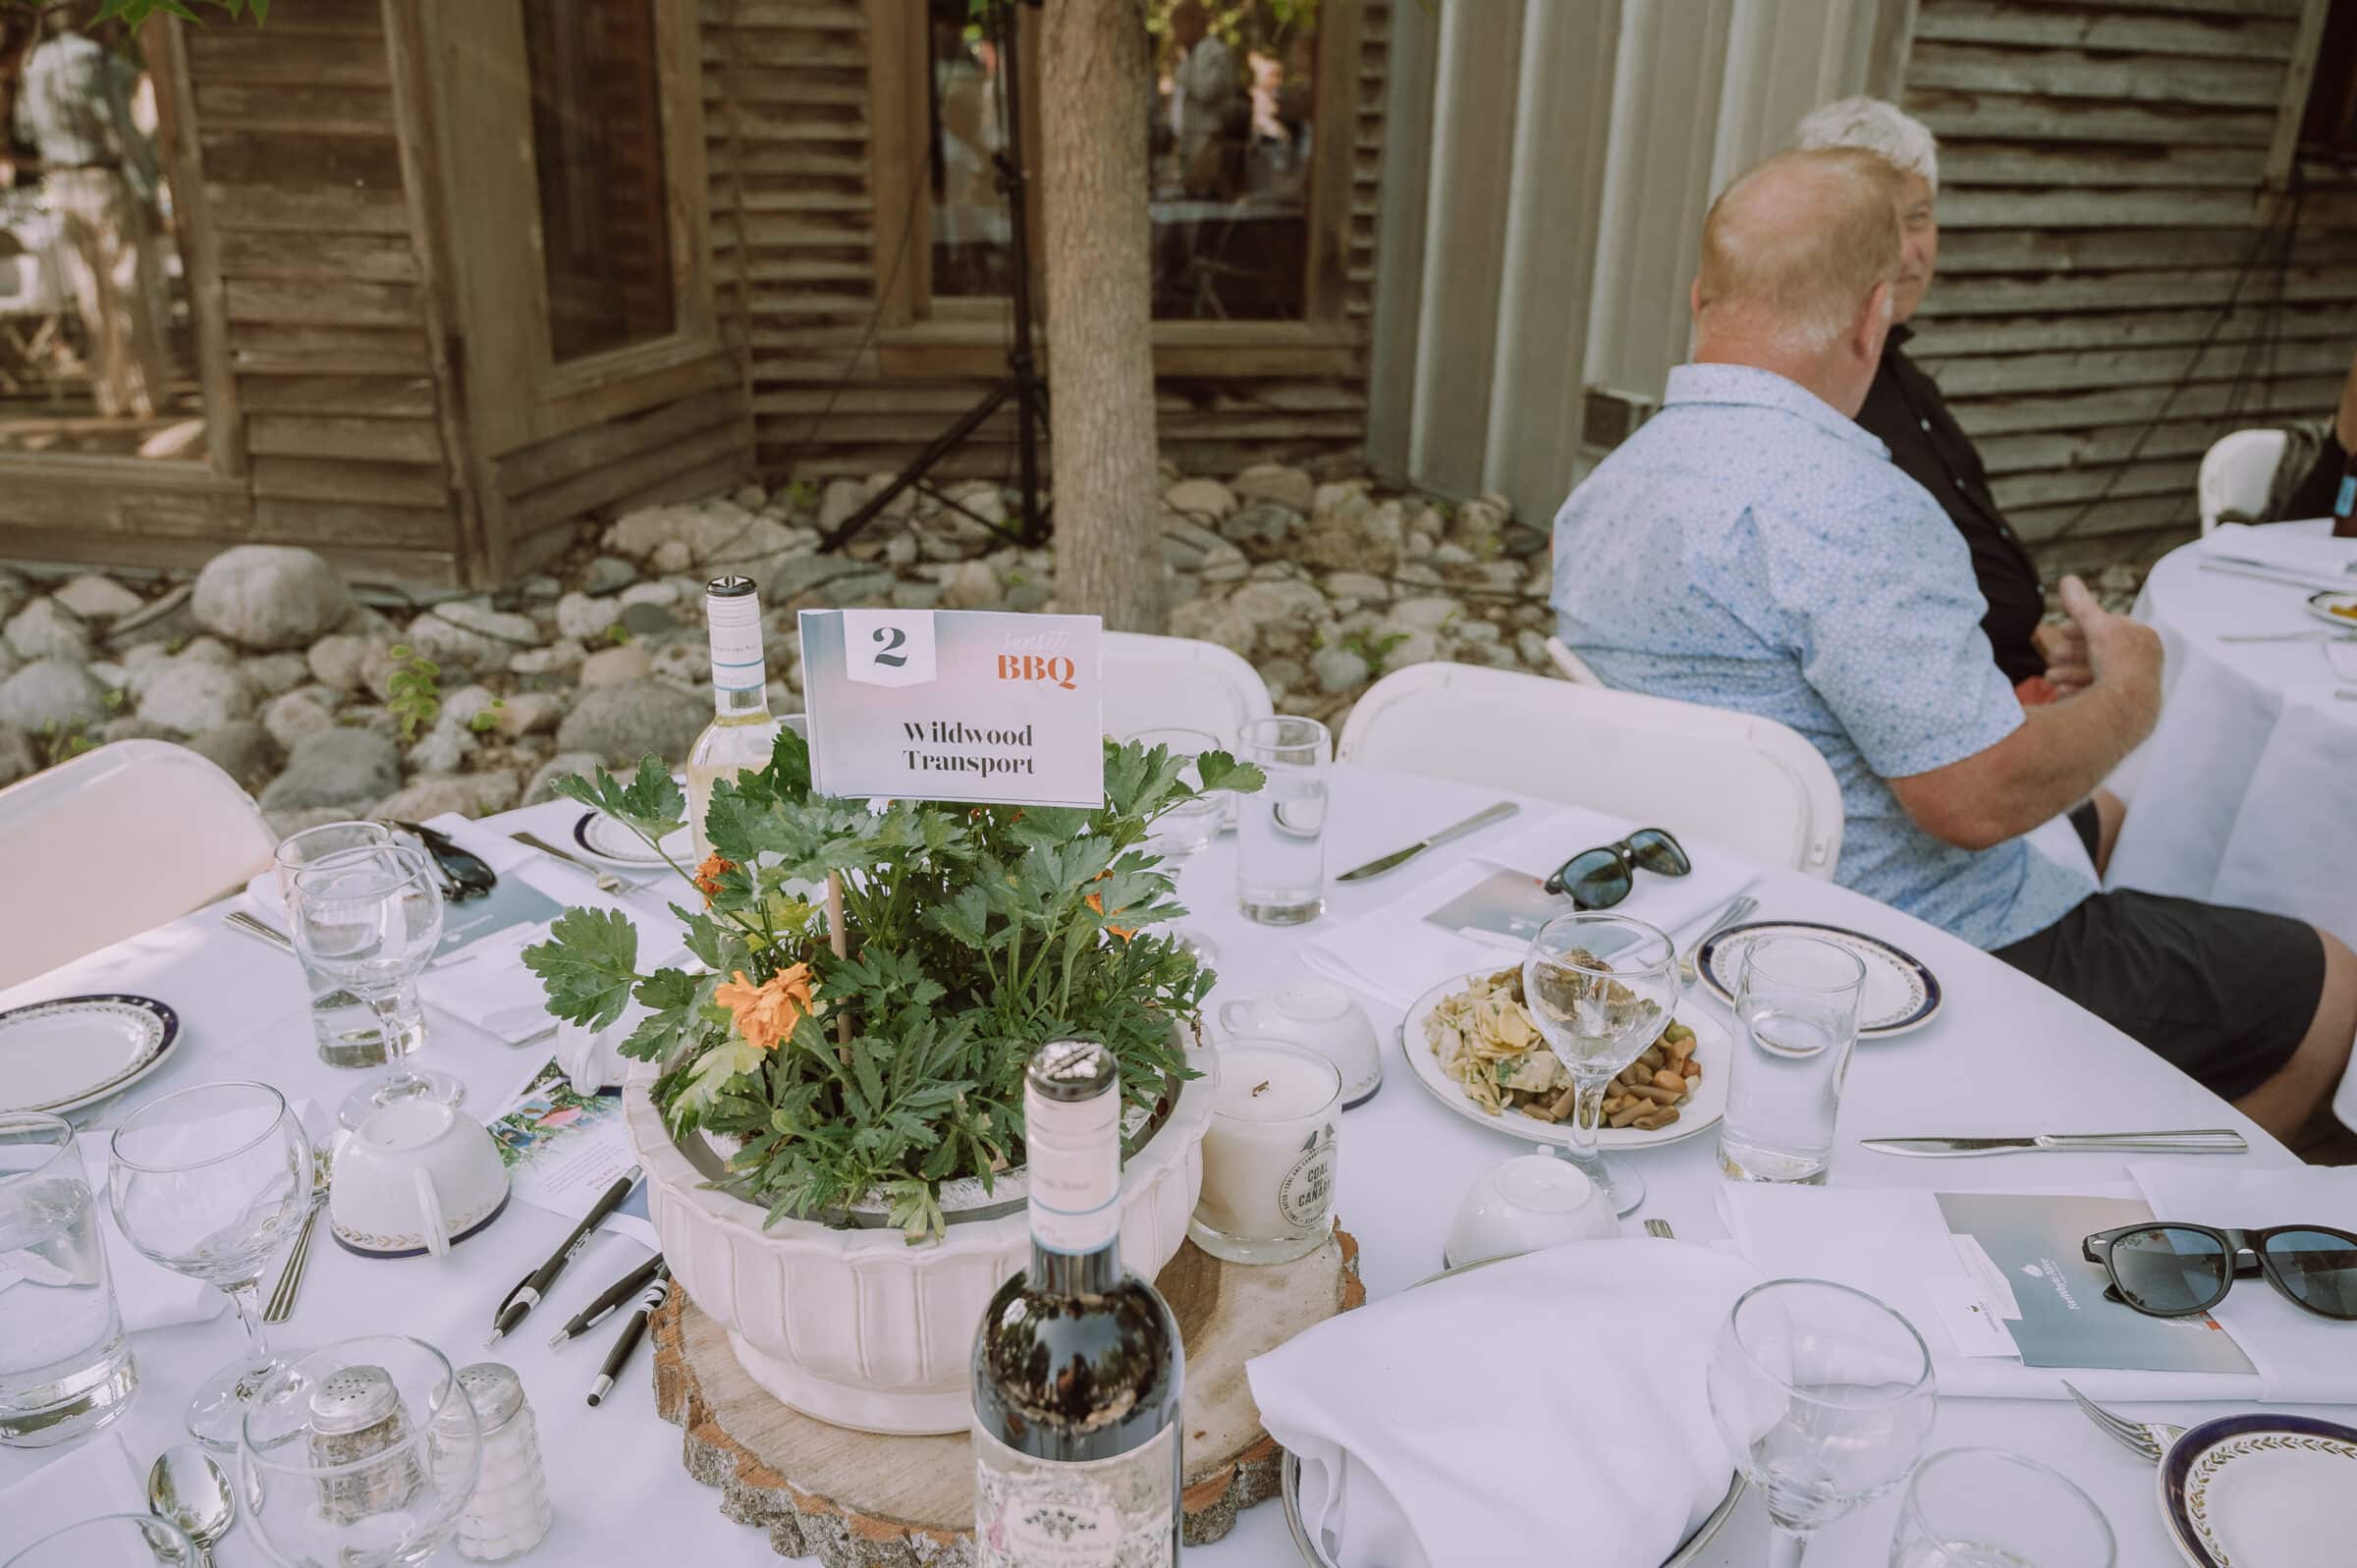 Flowerpot centrepiece on set table